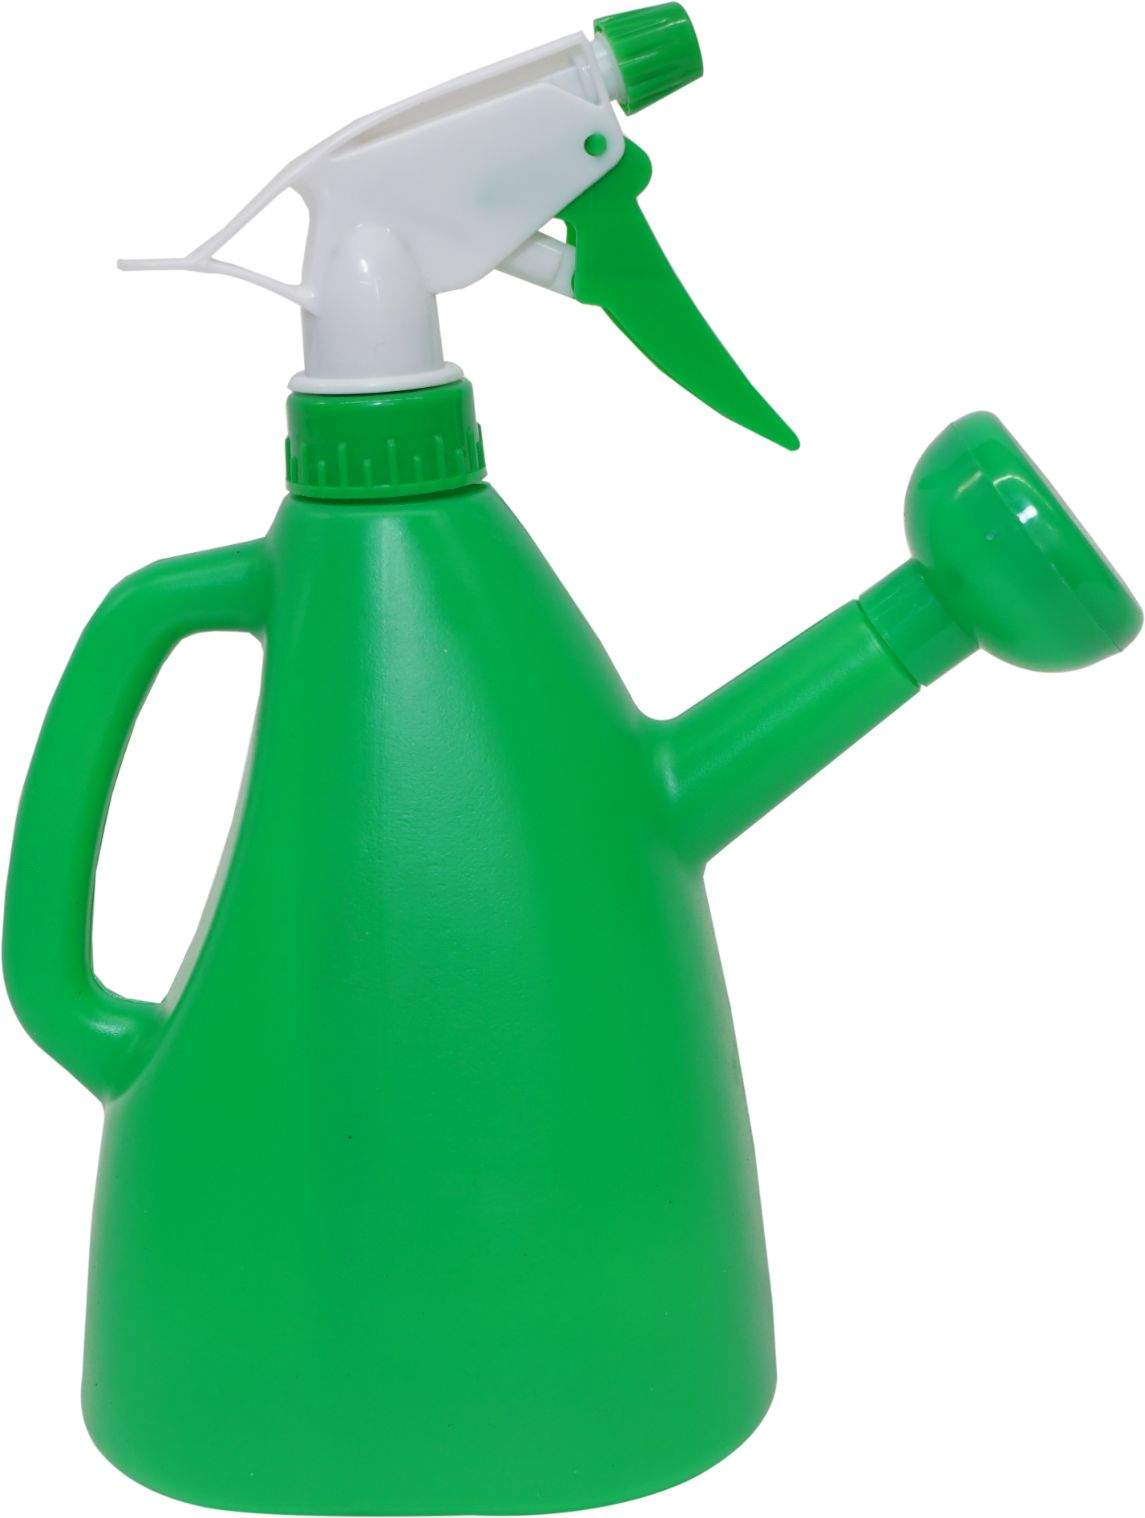 watering can / spray bottle